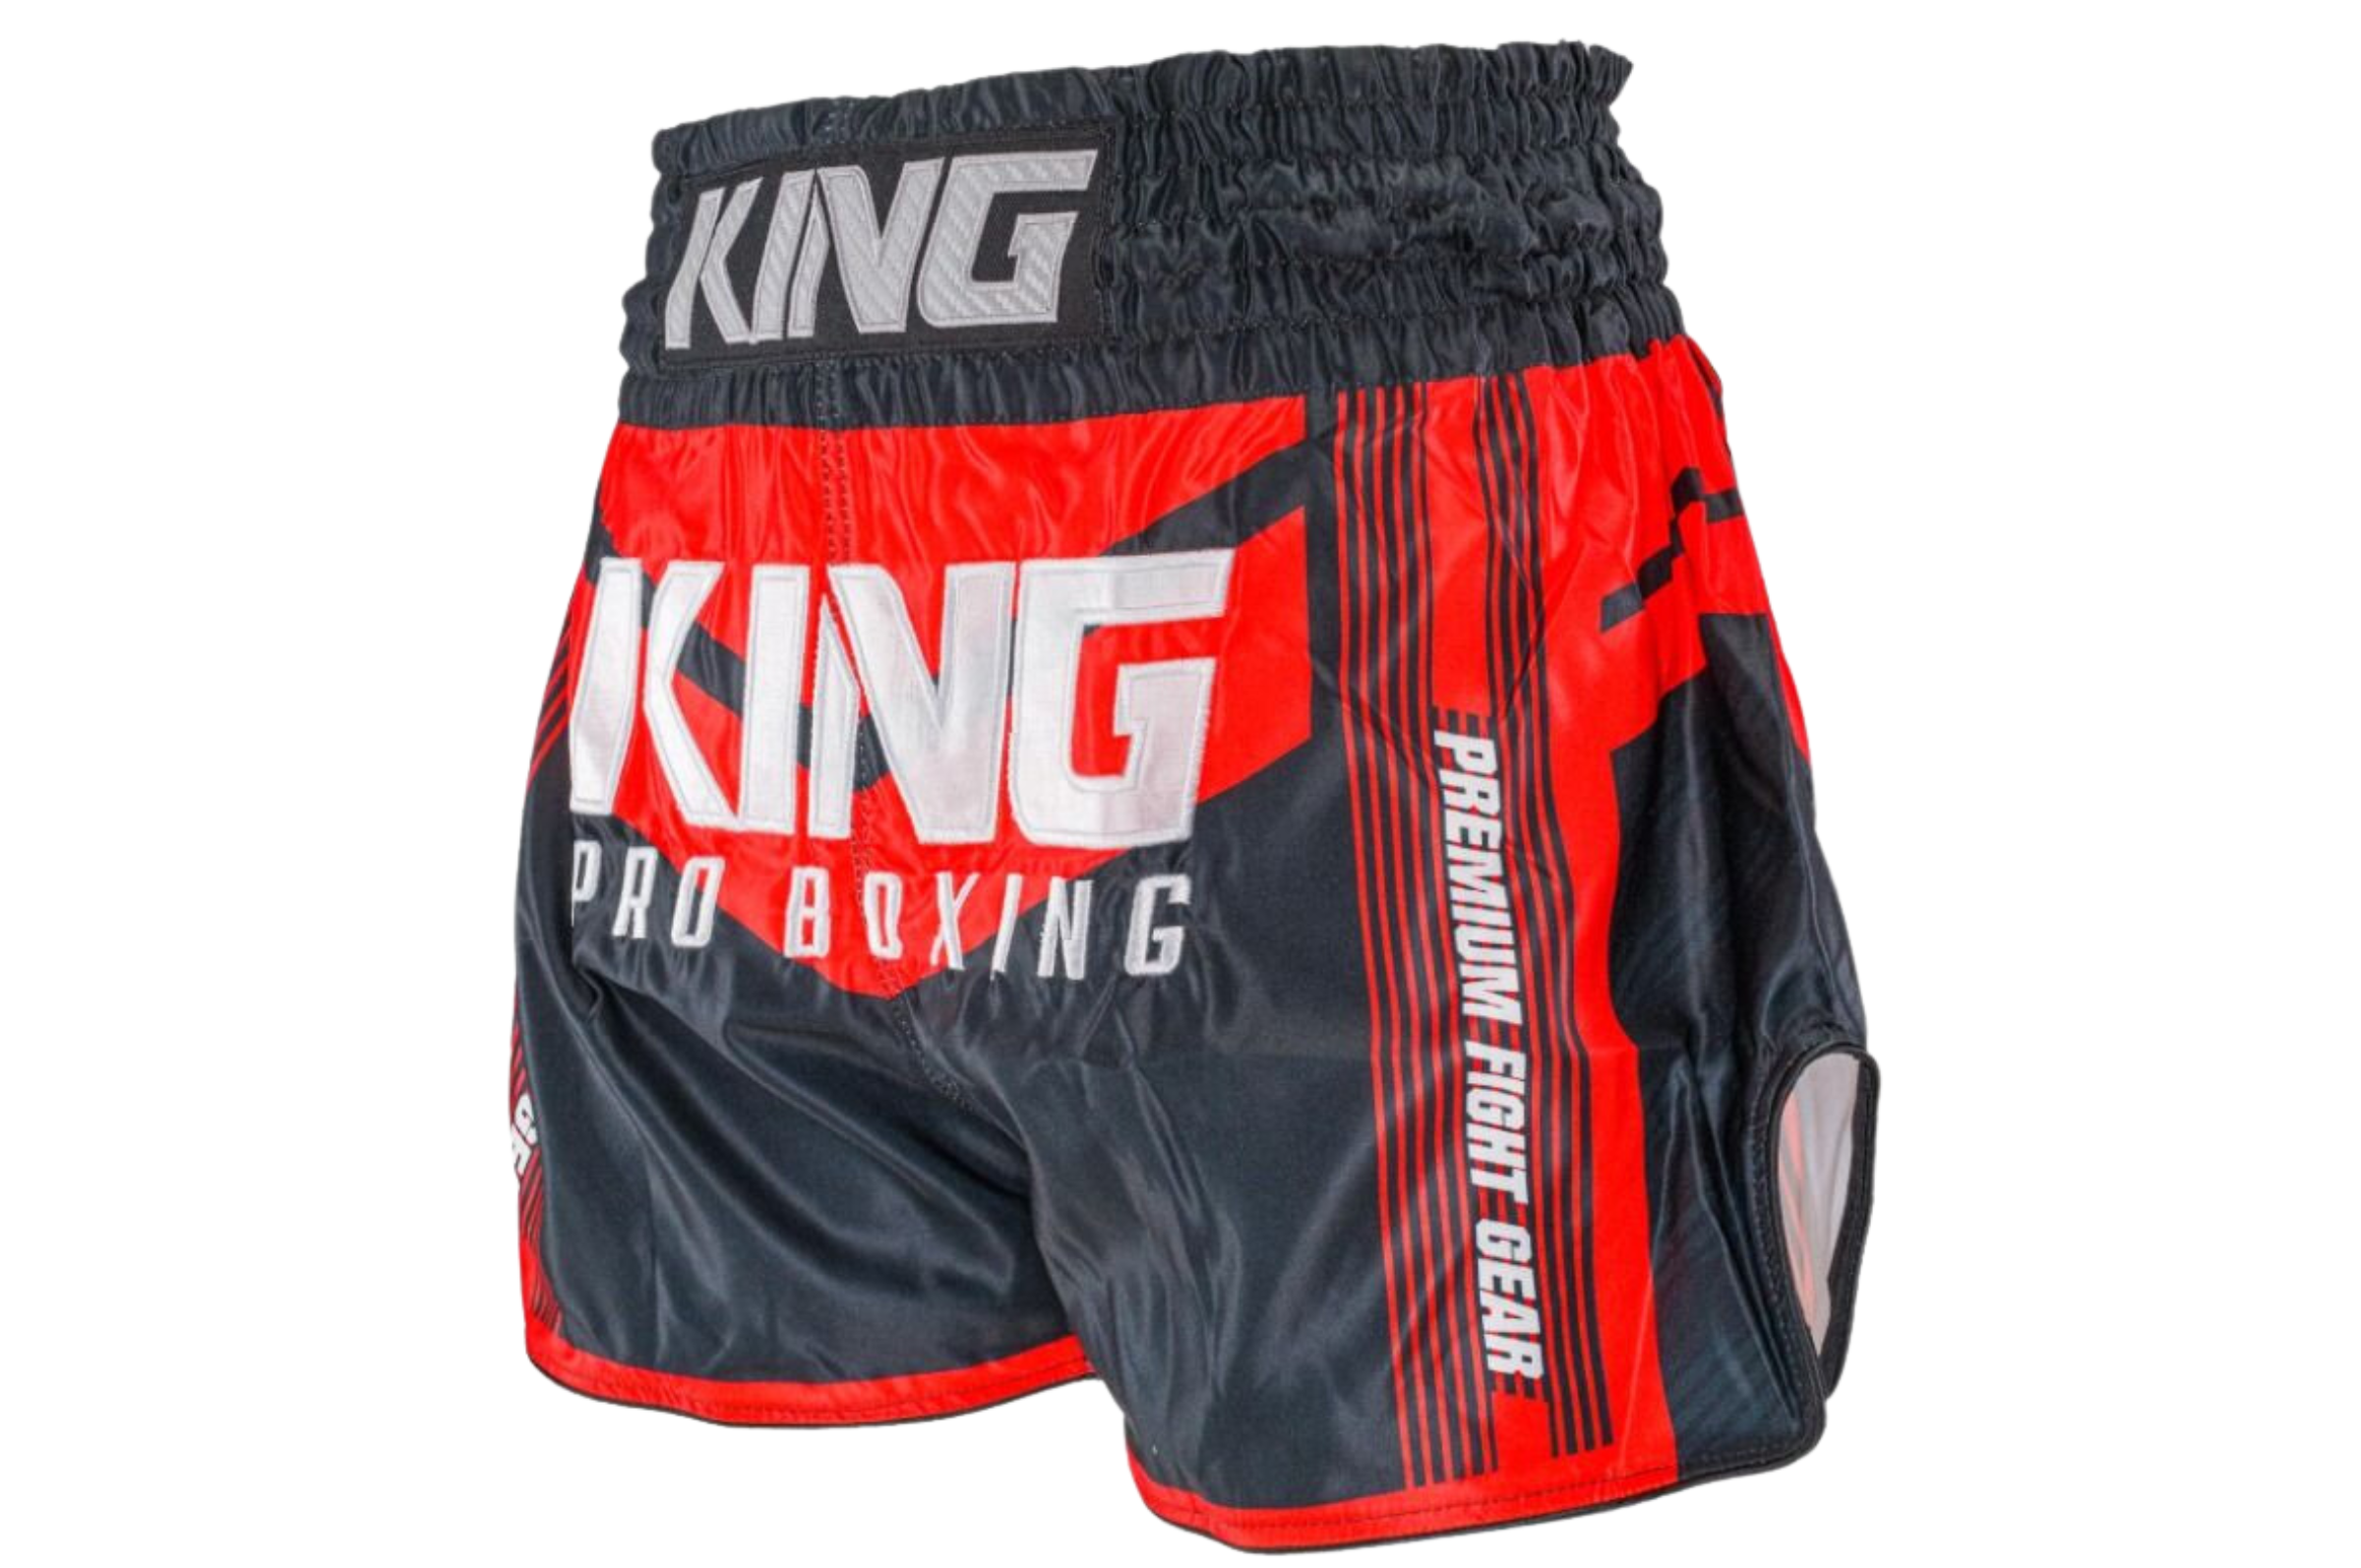 Kickboxing Shorts King Pro Boxing  Muay Thai Shop Europe - FIGHTWEAR SHOP  EUROPE